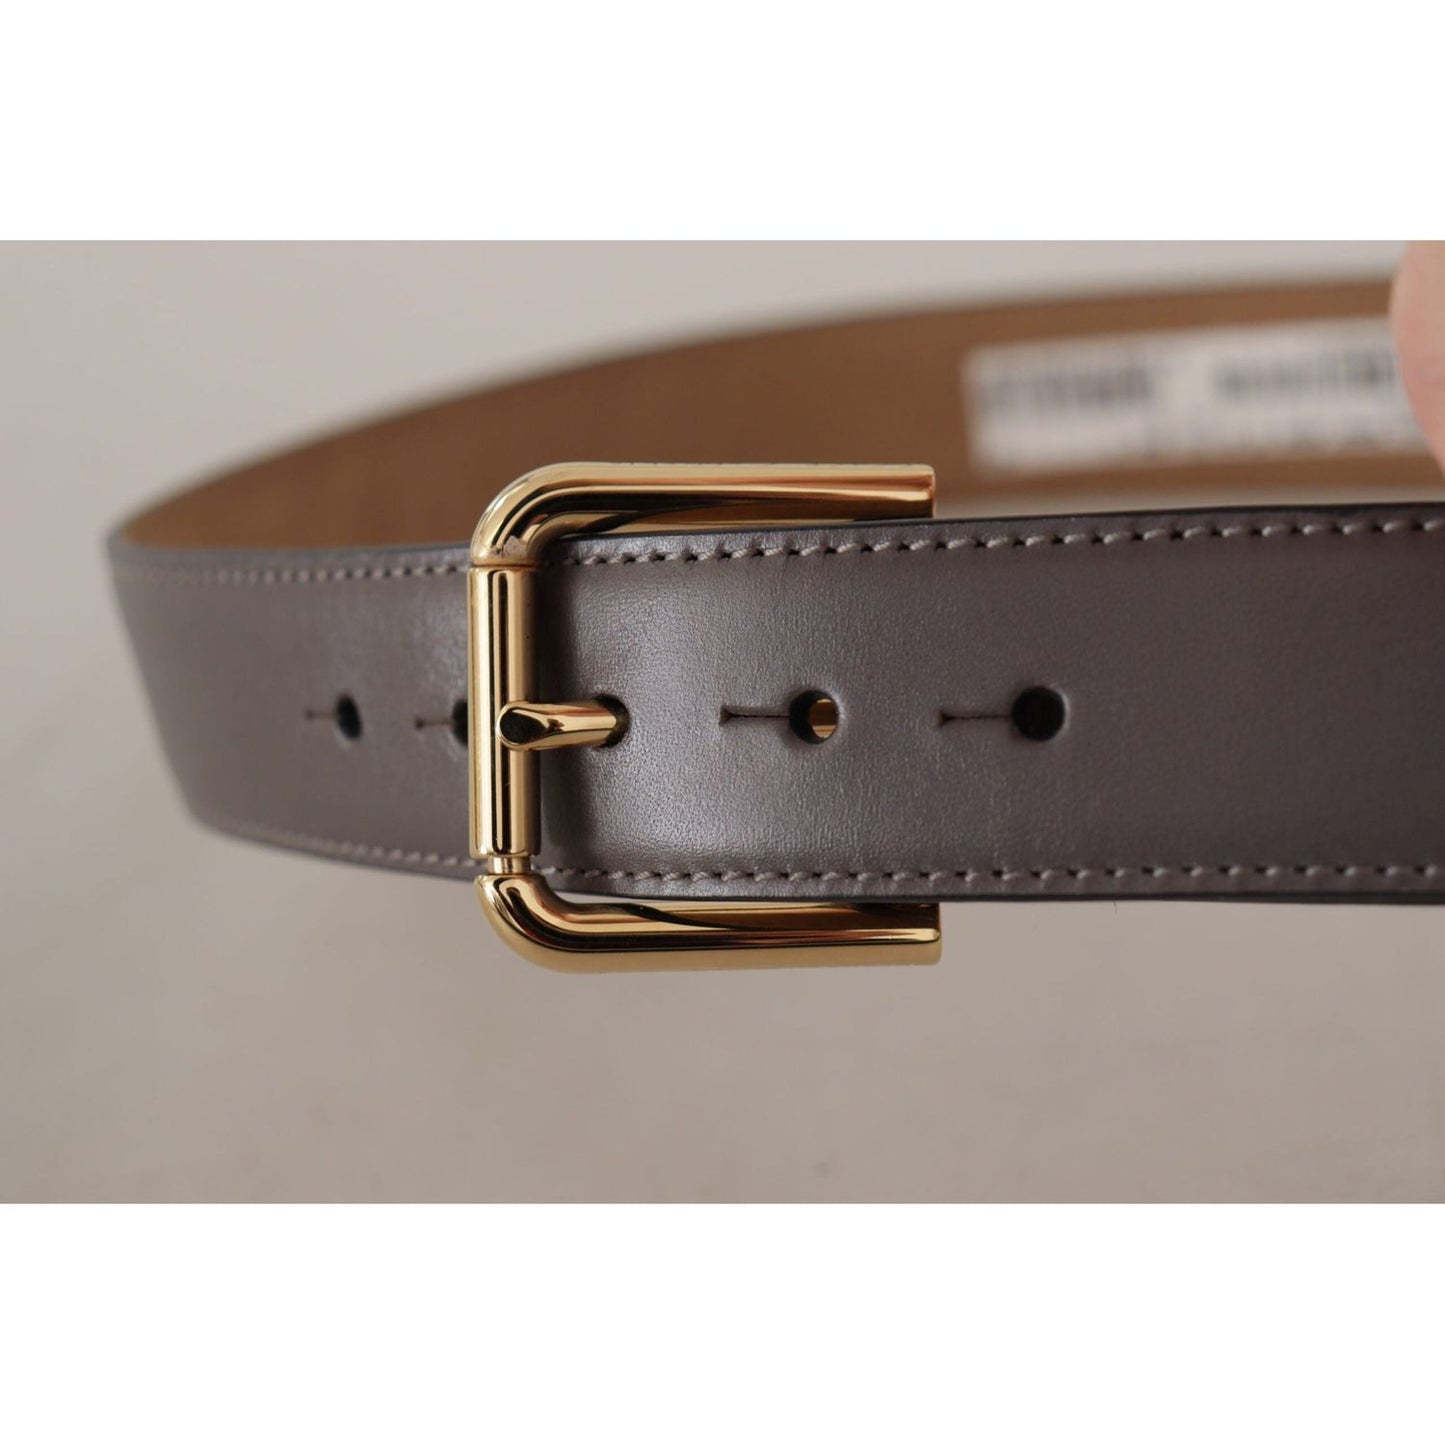 Dolce & Gabbana Elegant Engraved Buckle Leather Belt gray-calfskin-leather-gold-metal-logo-buckle-belt IMG_8909-scaled-15a7a2b1-880.jpg